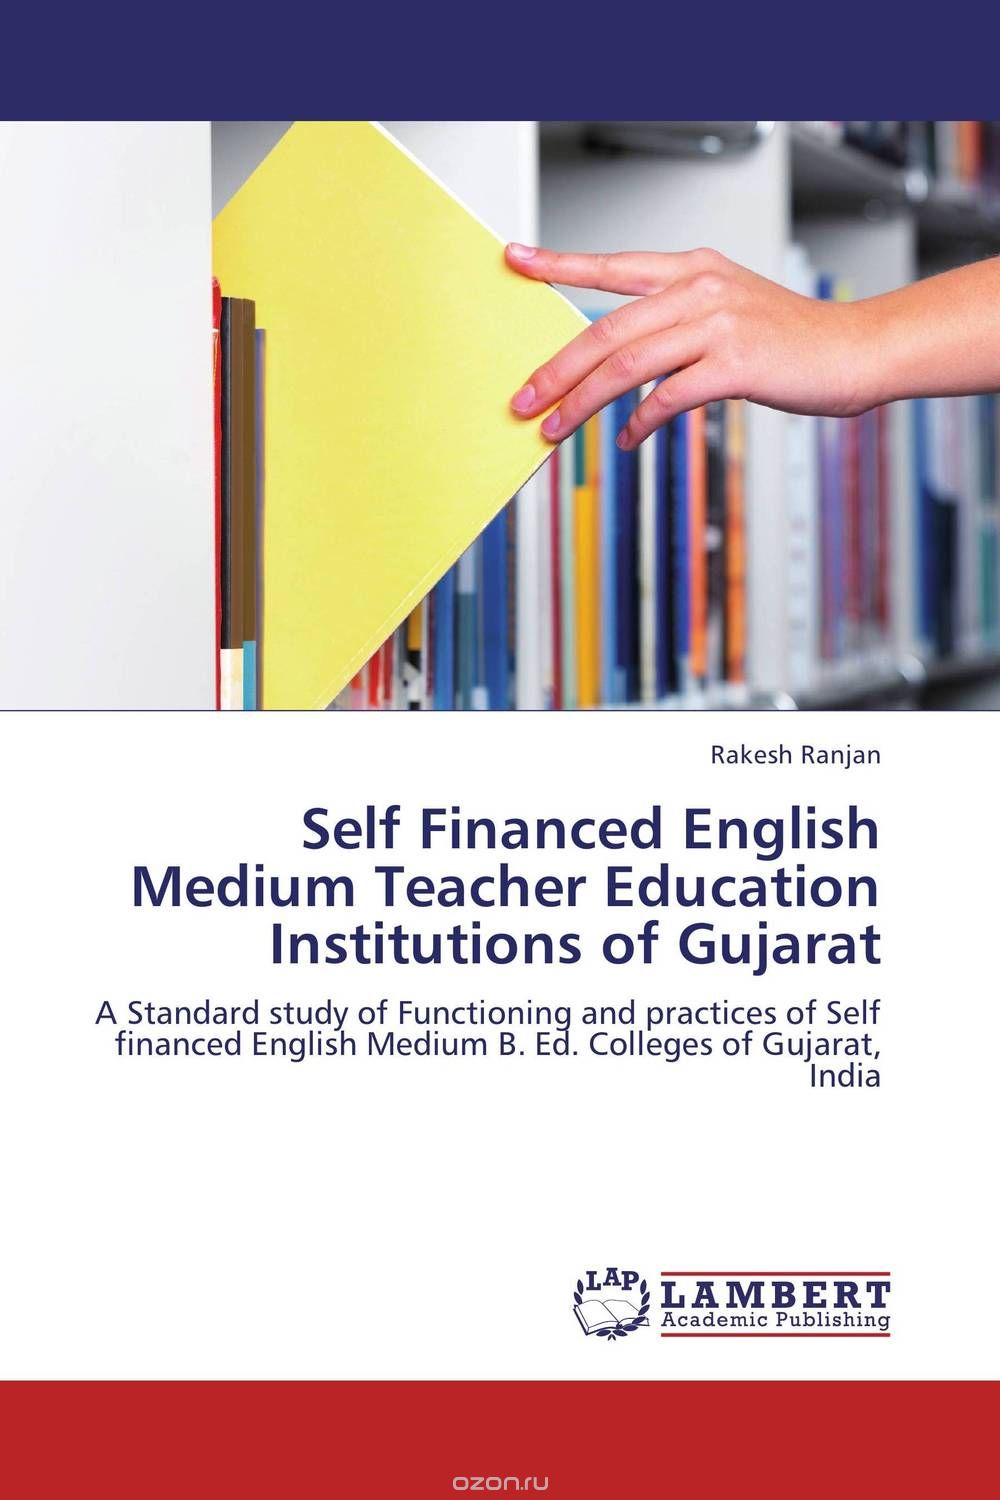 Скачать книгу "Self Financed English Medium Teacher Education Institutions of Gujarat"